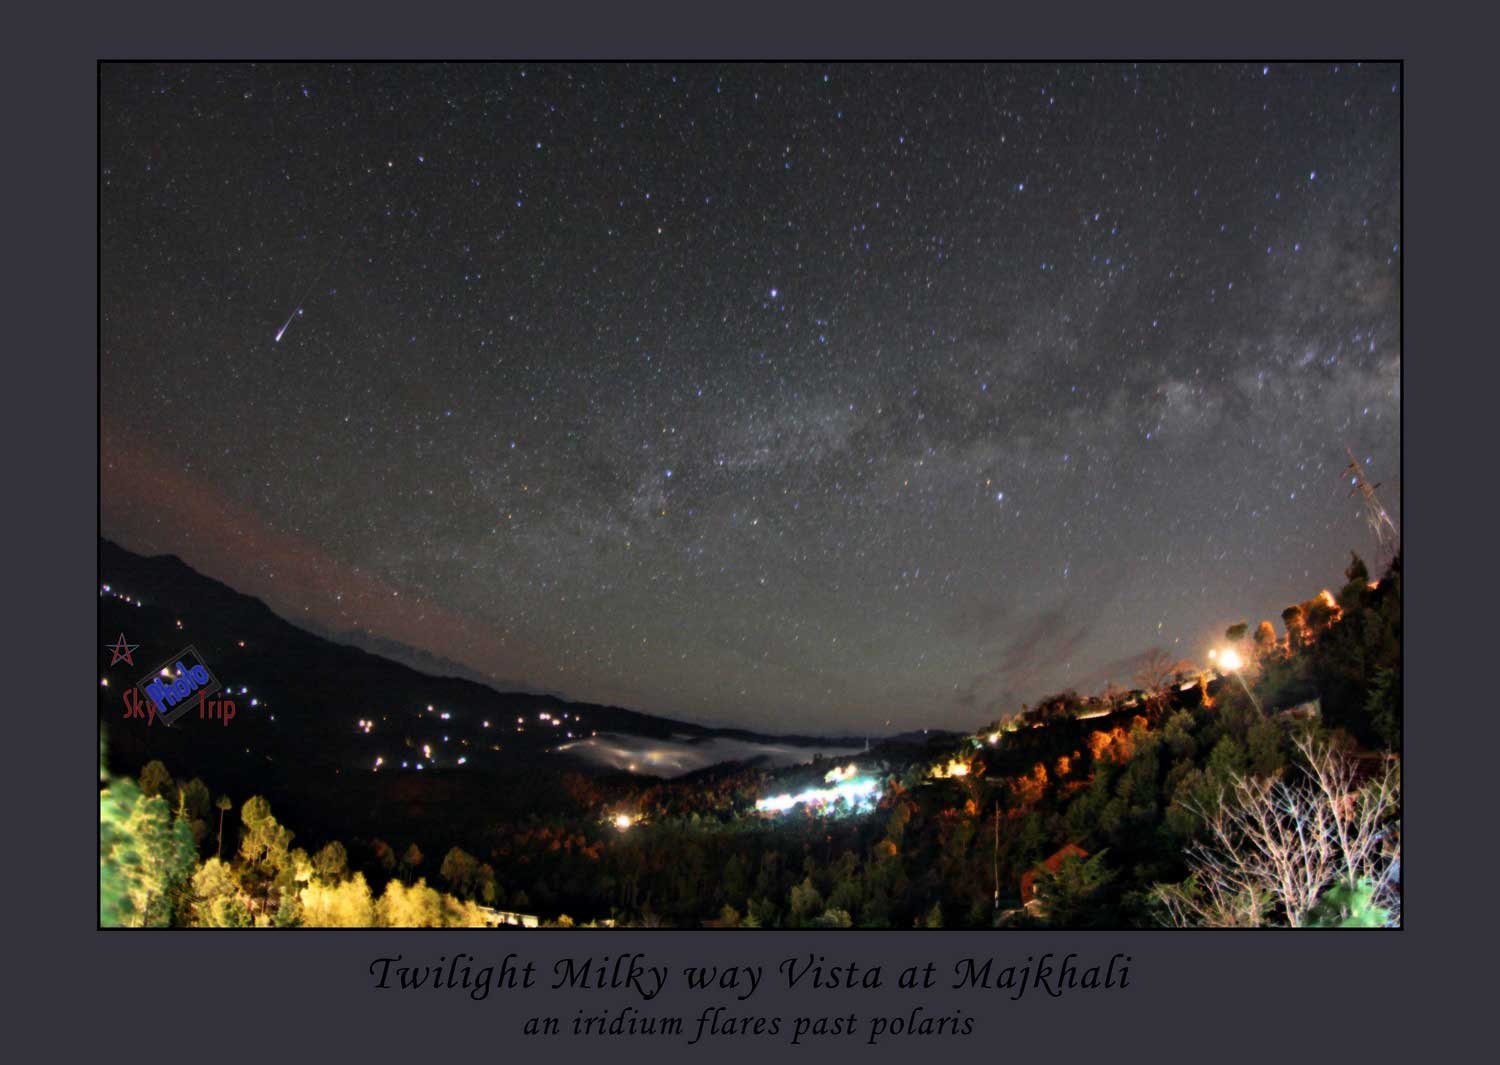 Twilight-Milky-Way-Vista-at-Majkhali